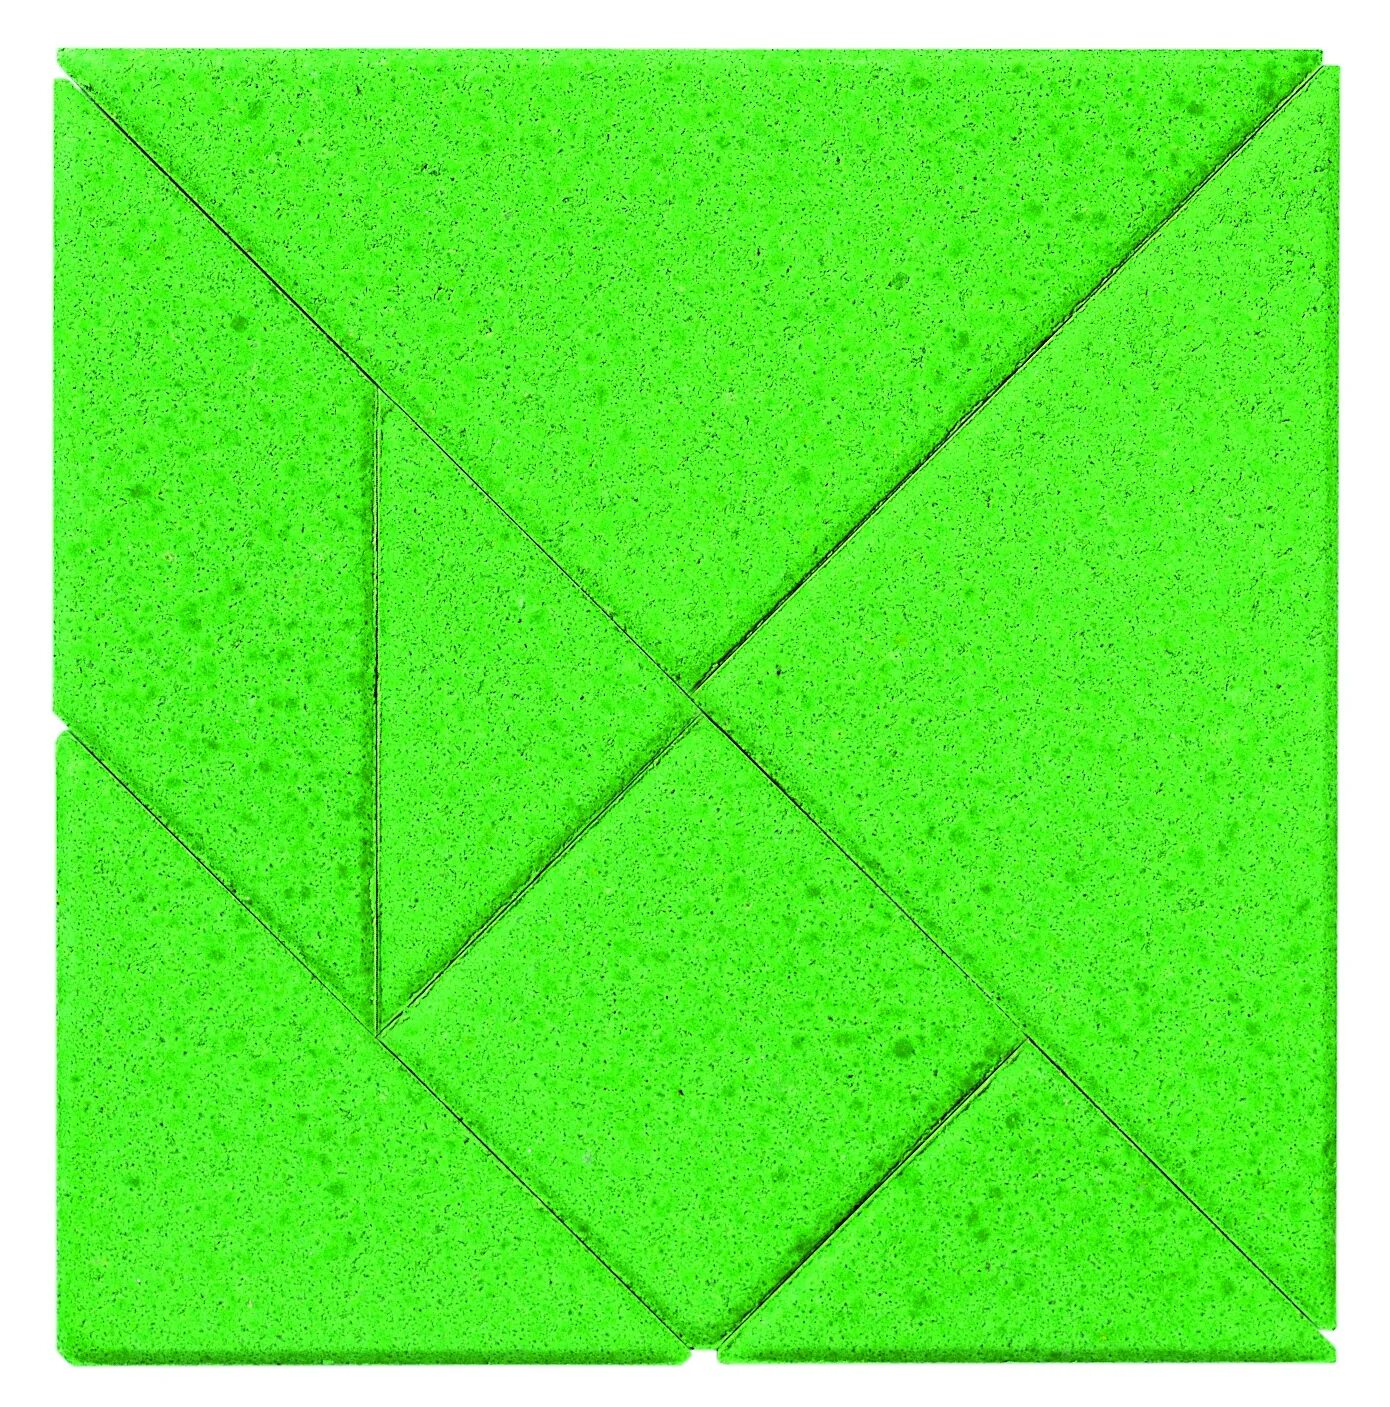 Квад рат. Зеленый квадрат. Зеленый квадратик. Салатовый квадрат. Квадратики зеленого цвета.